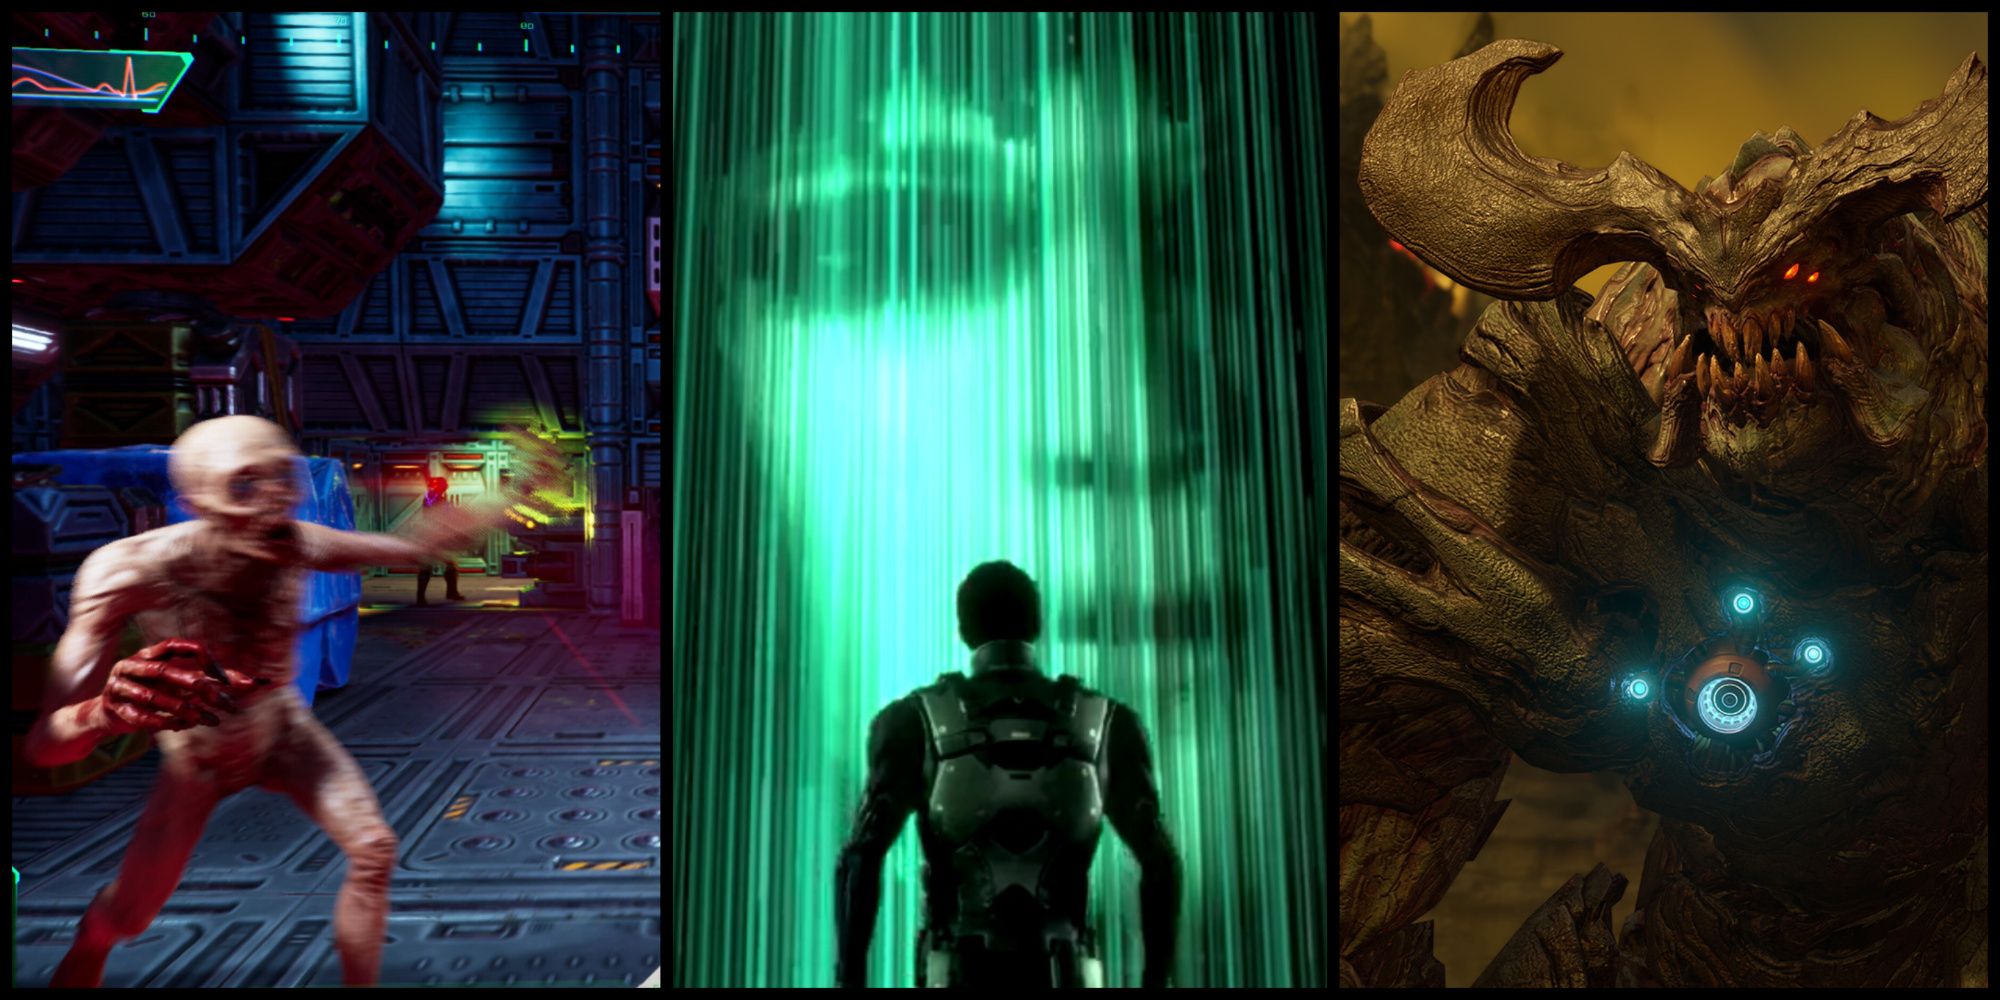 screenshots from System Shock, Deus Ex: Human Revolution, and Doom 2016